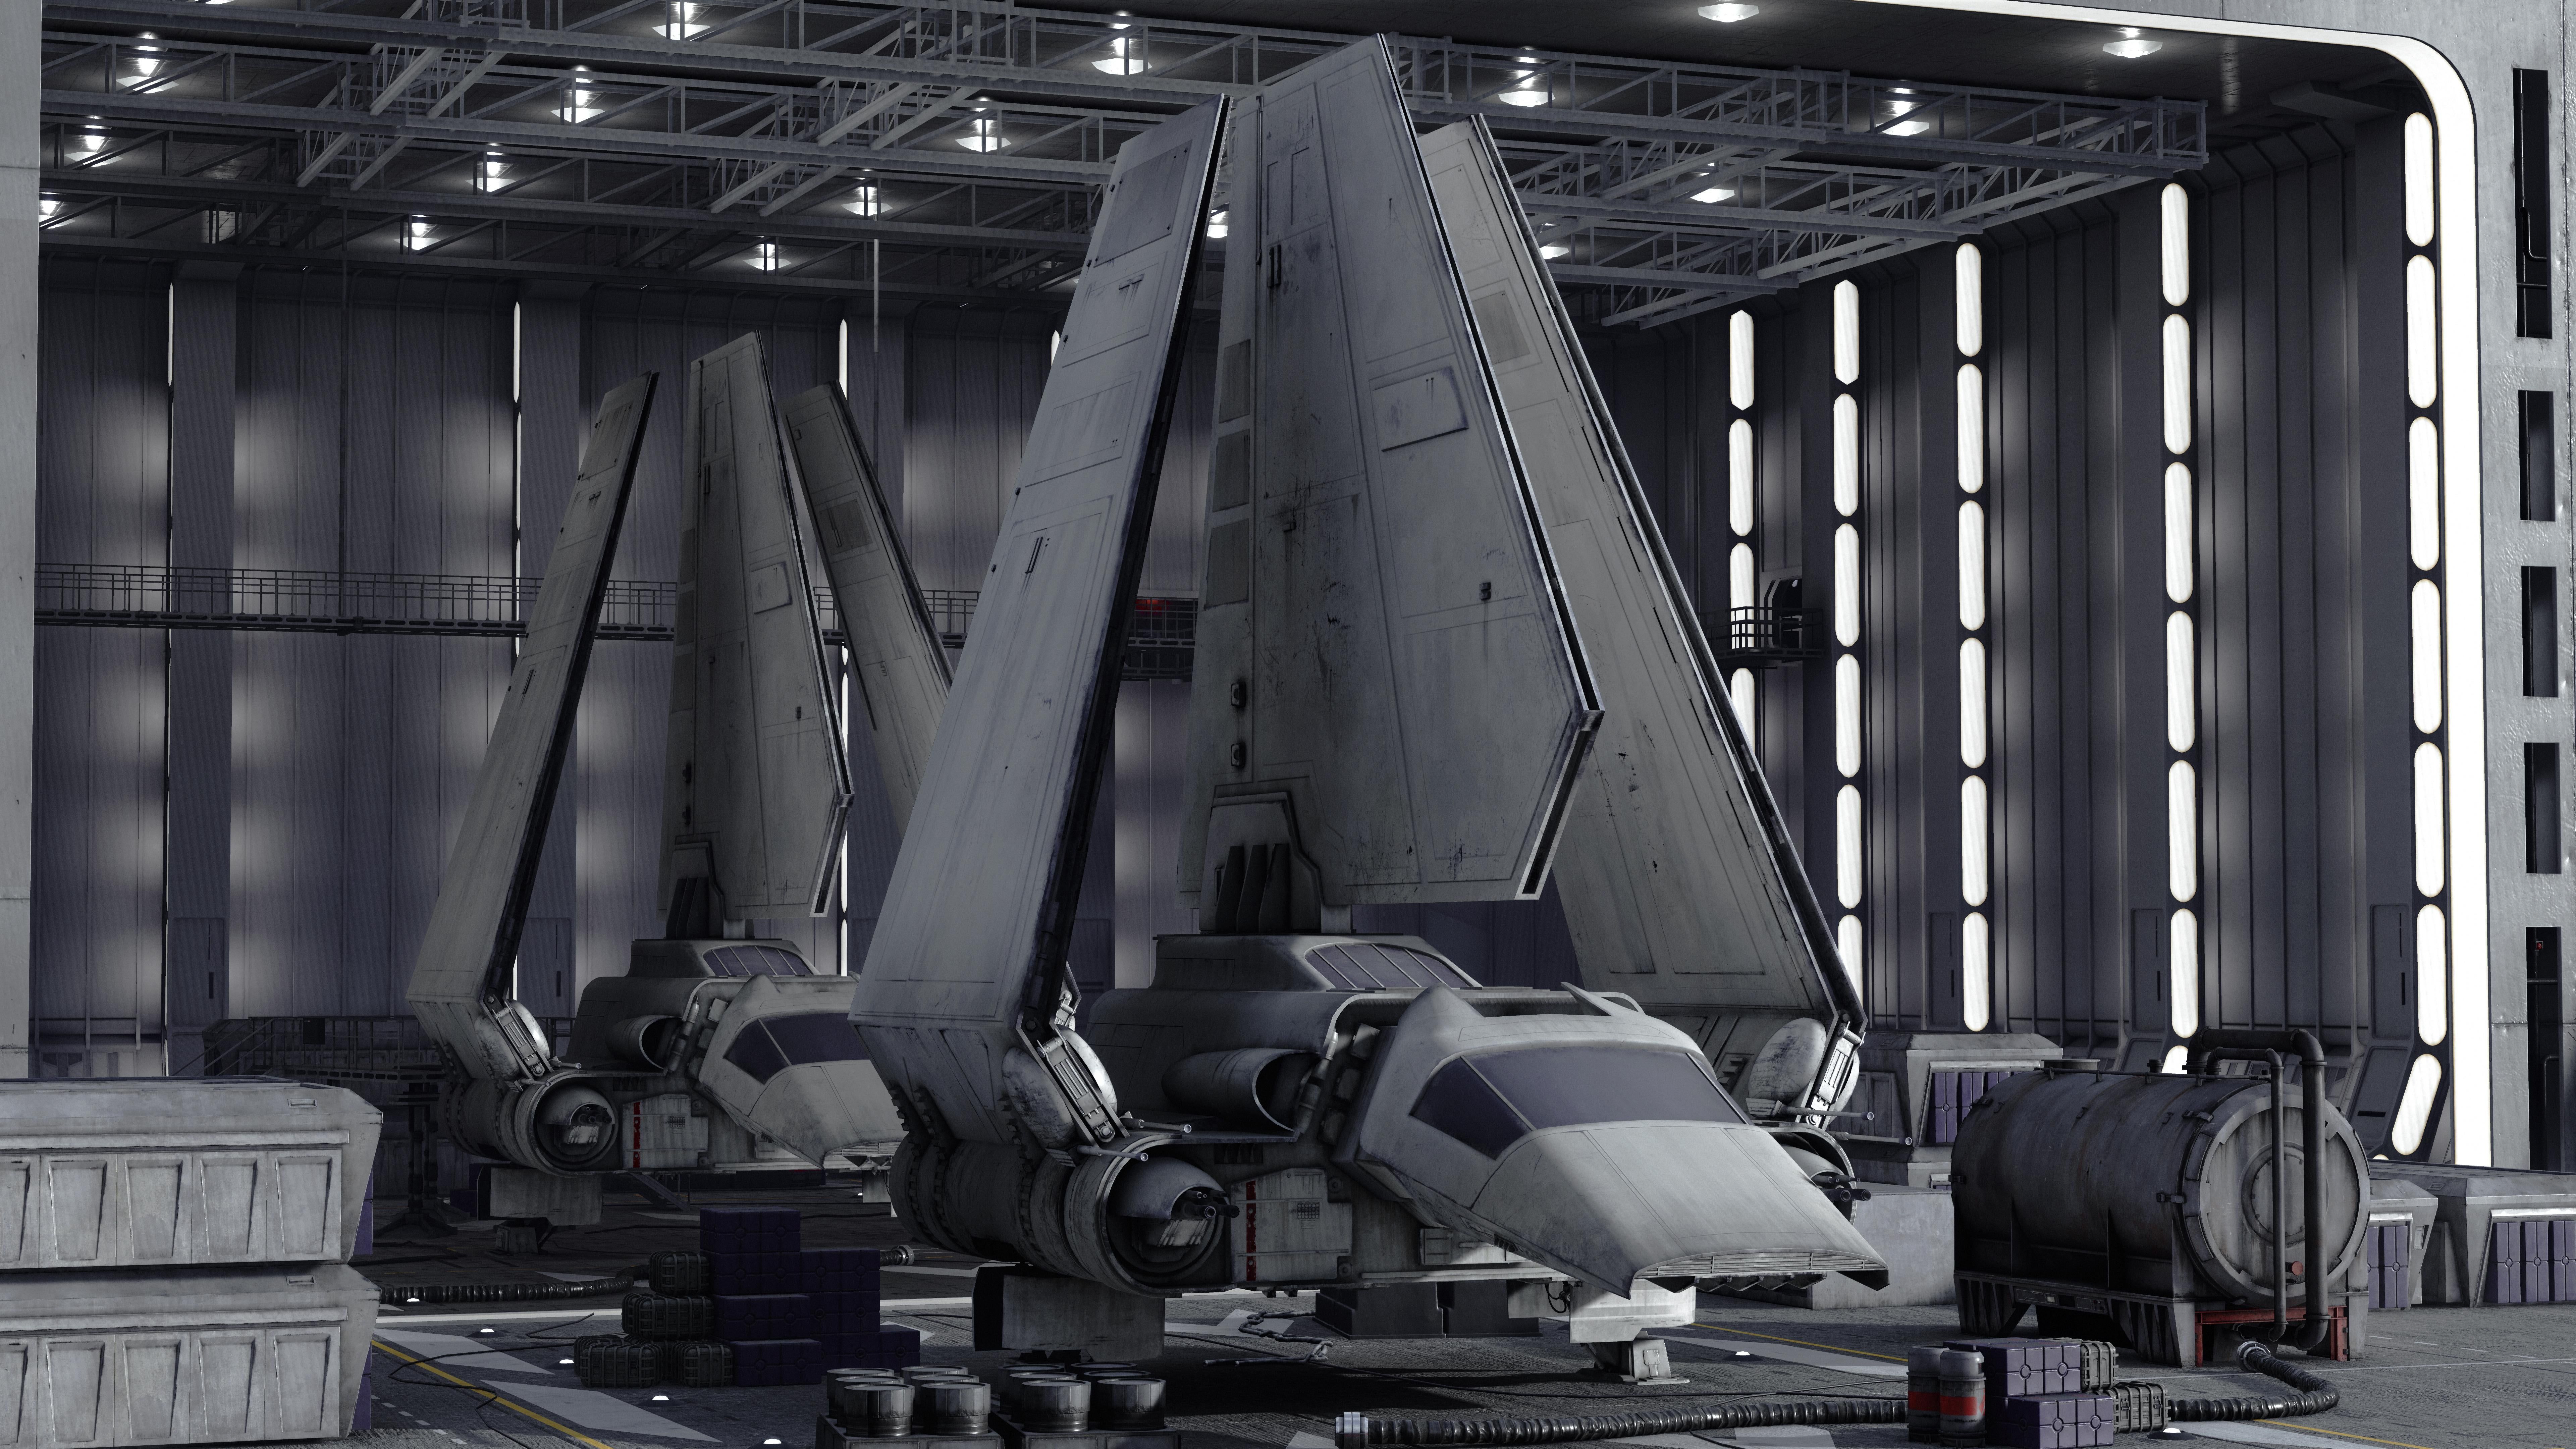 BF1 (2015) Imperial Shuttle Bay on .reddit.com